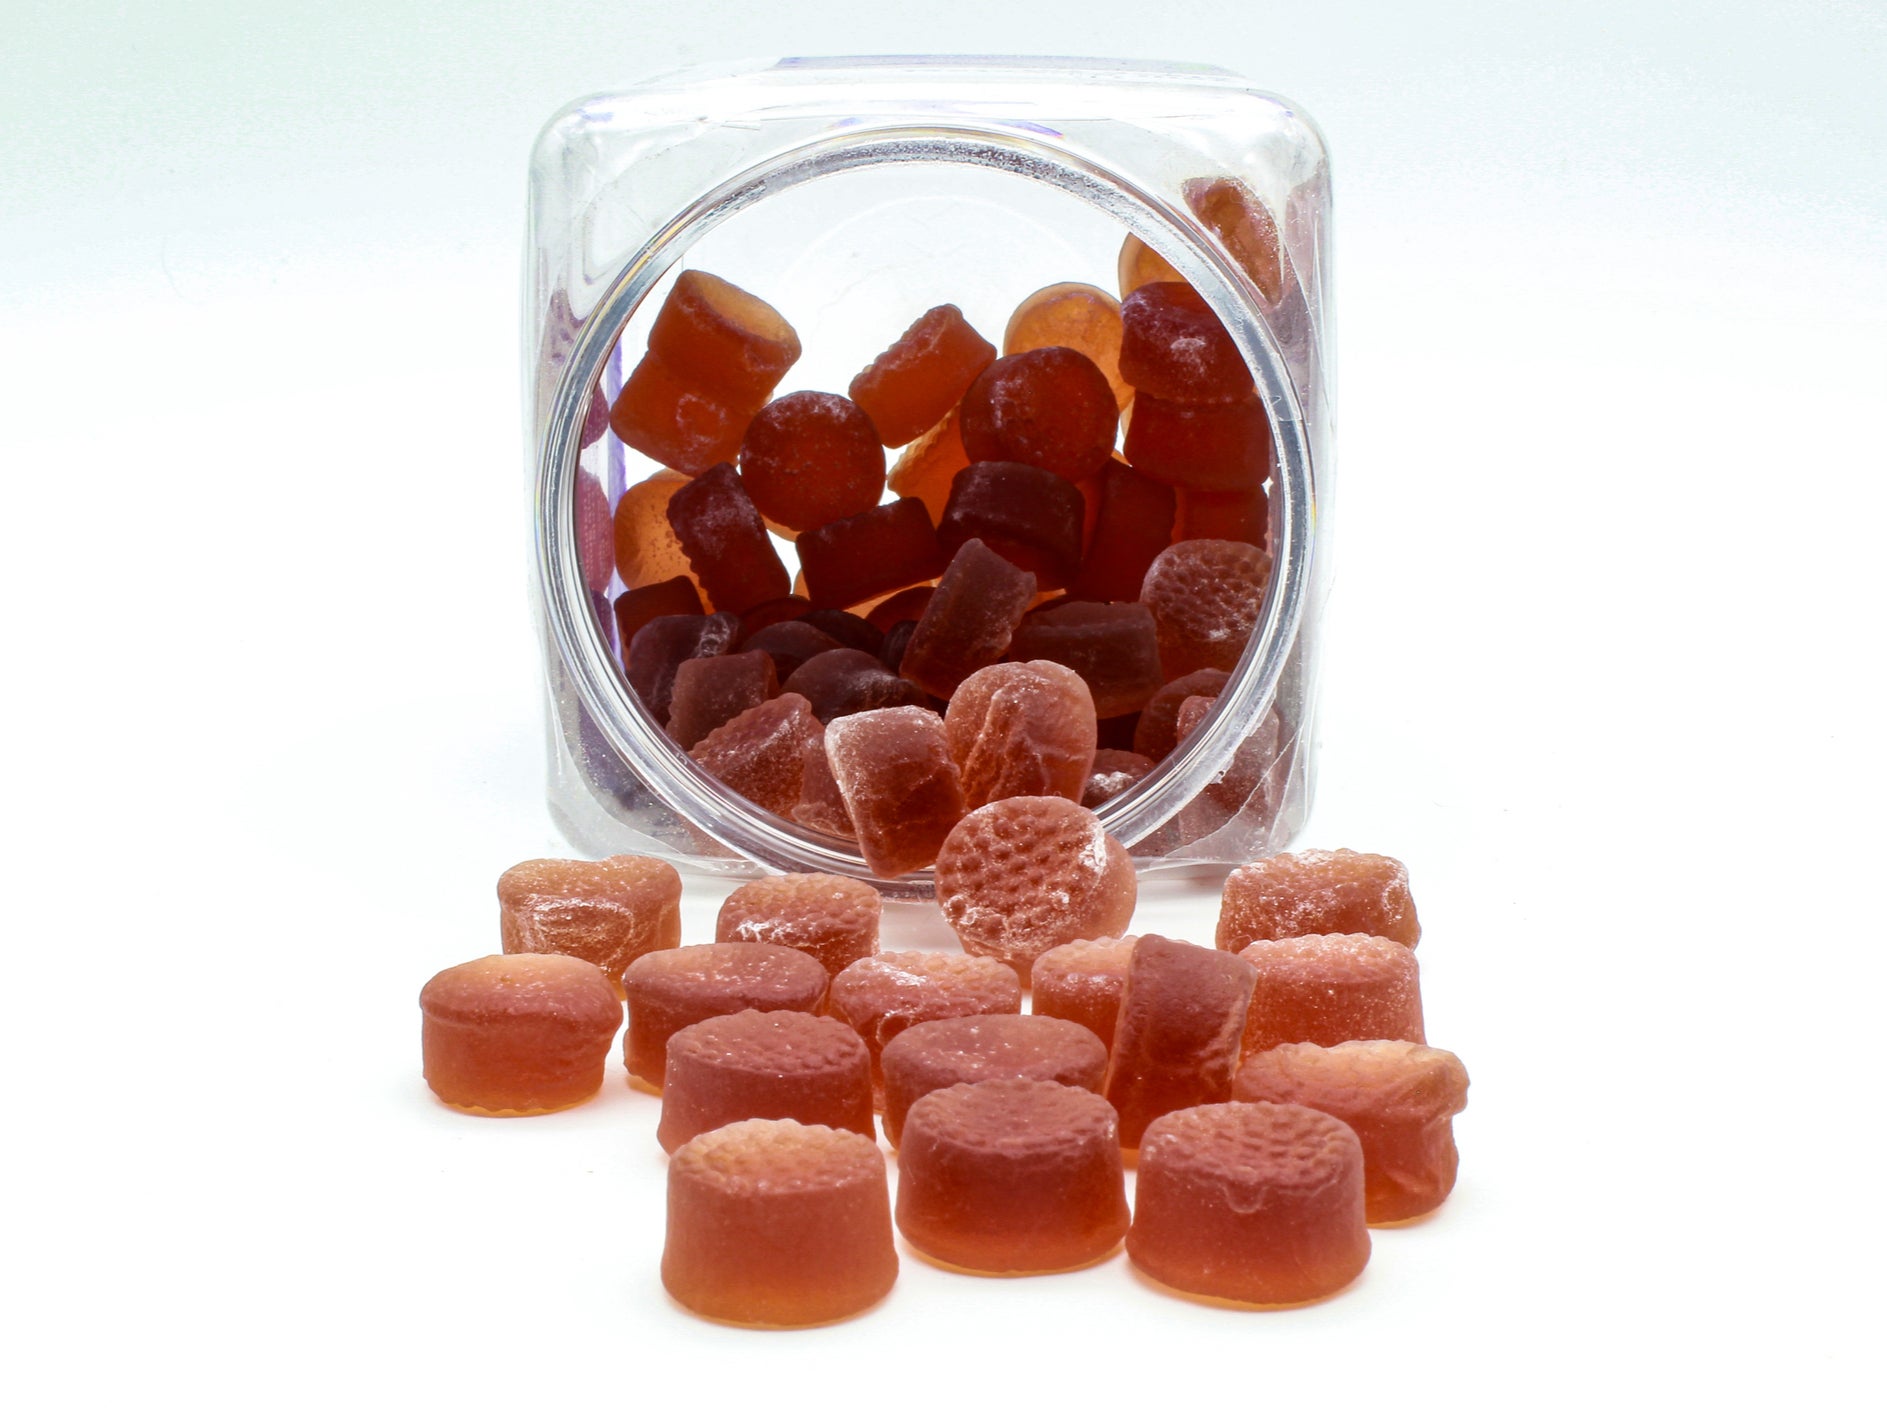 A jar of melatonin gummy supplements